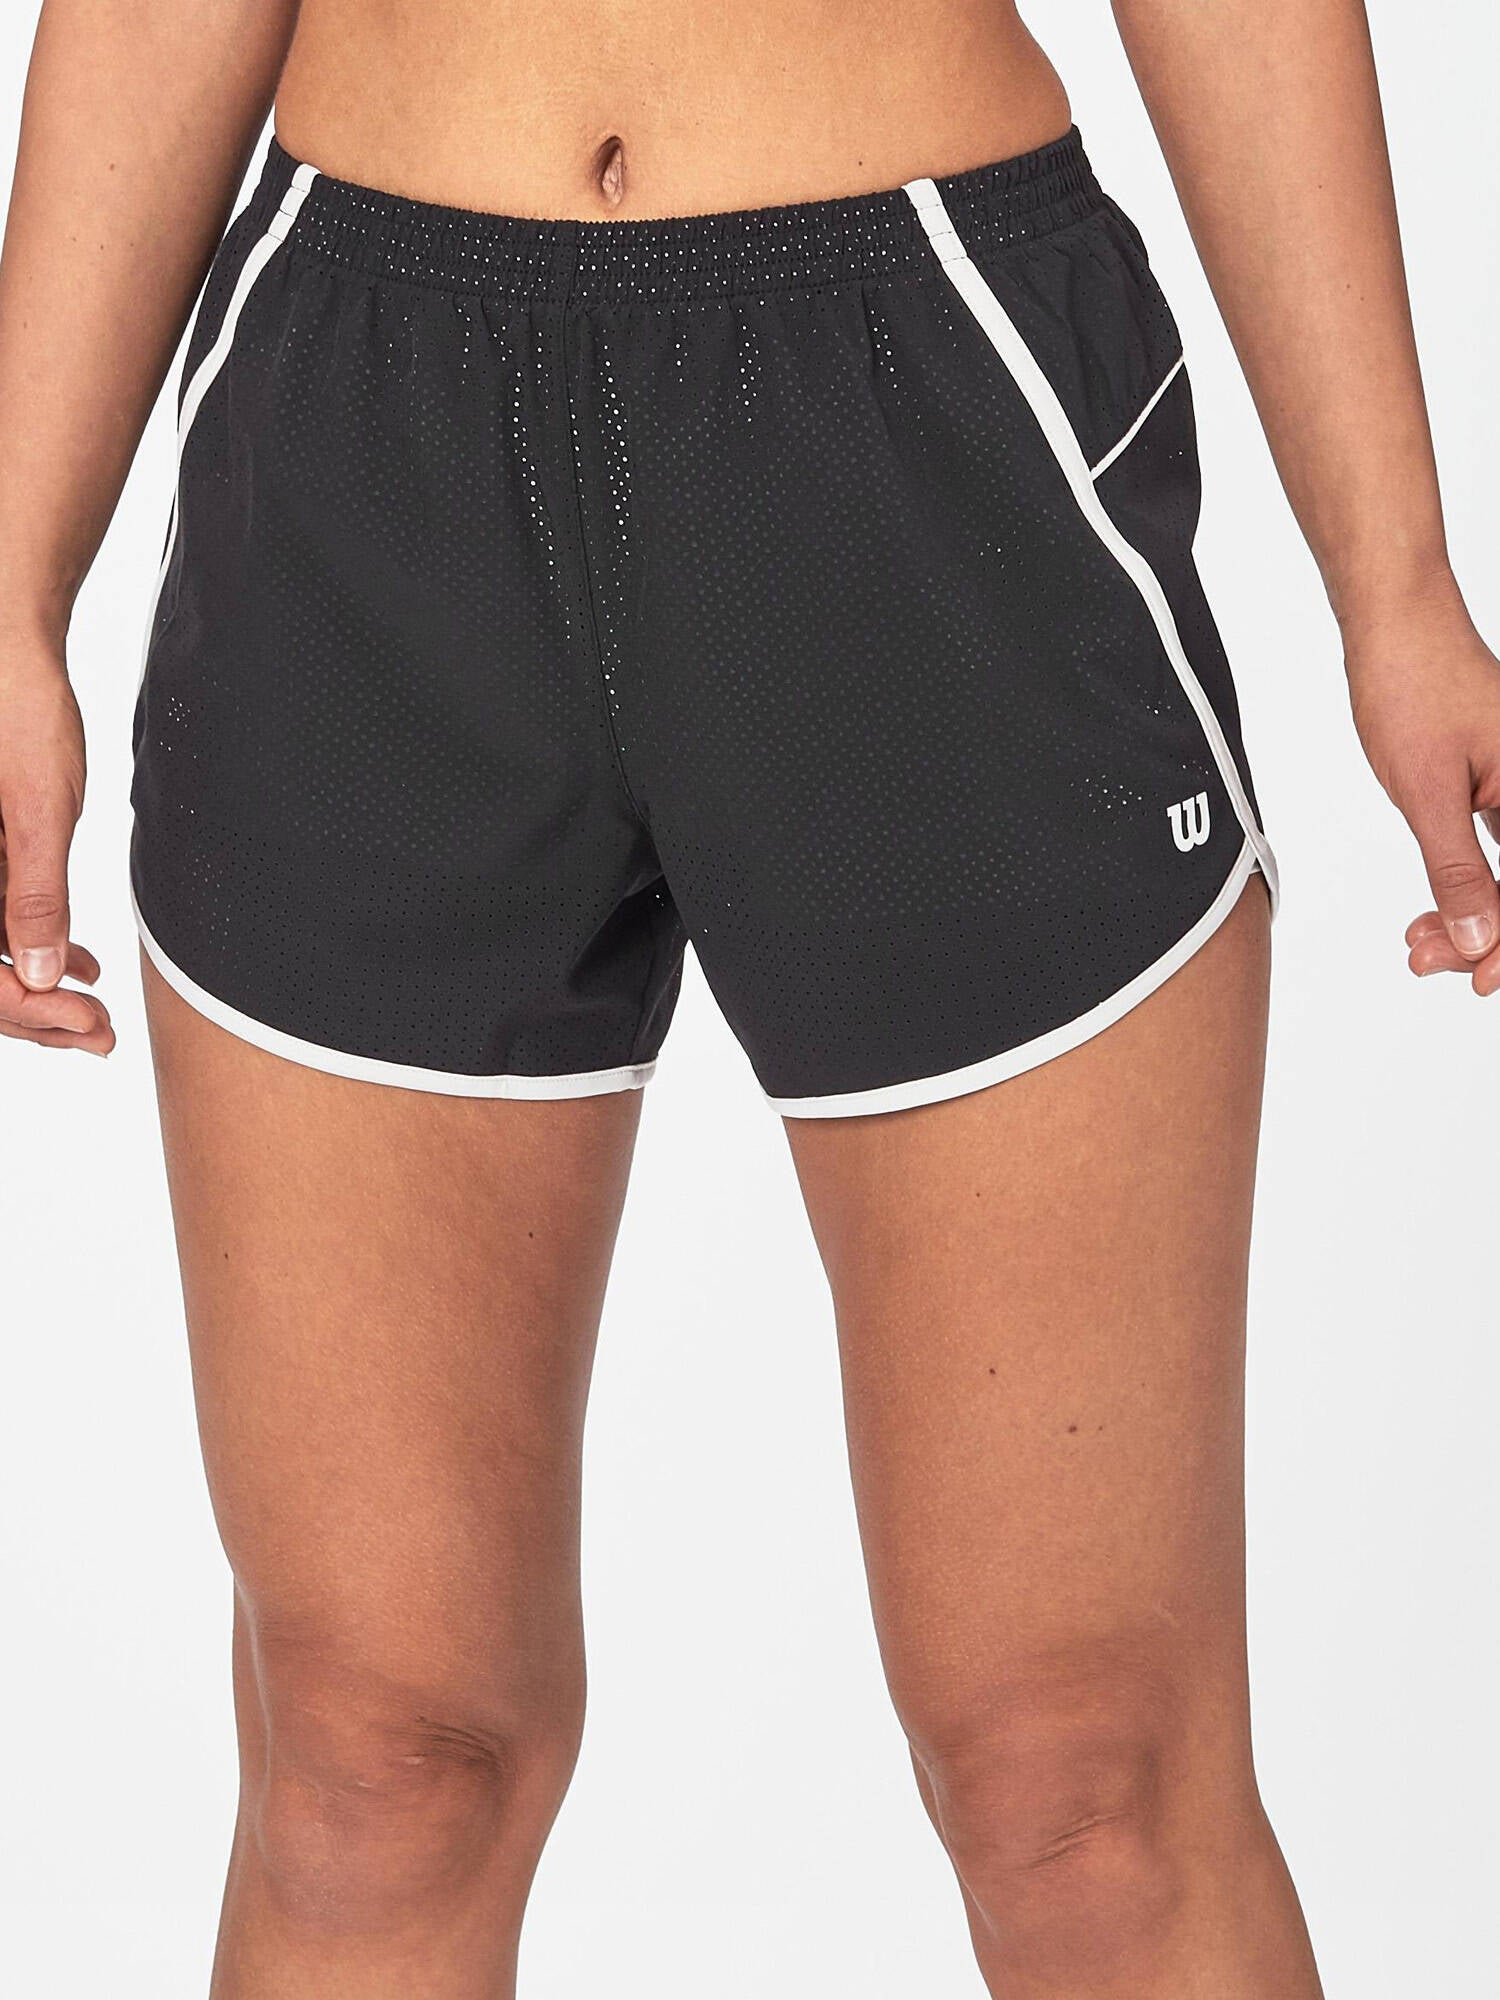 Wilson Women’s Tennis Shorts Size XS Black Brand New 